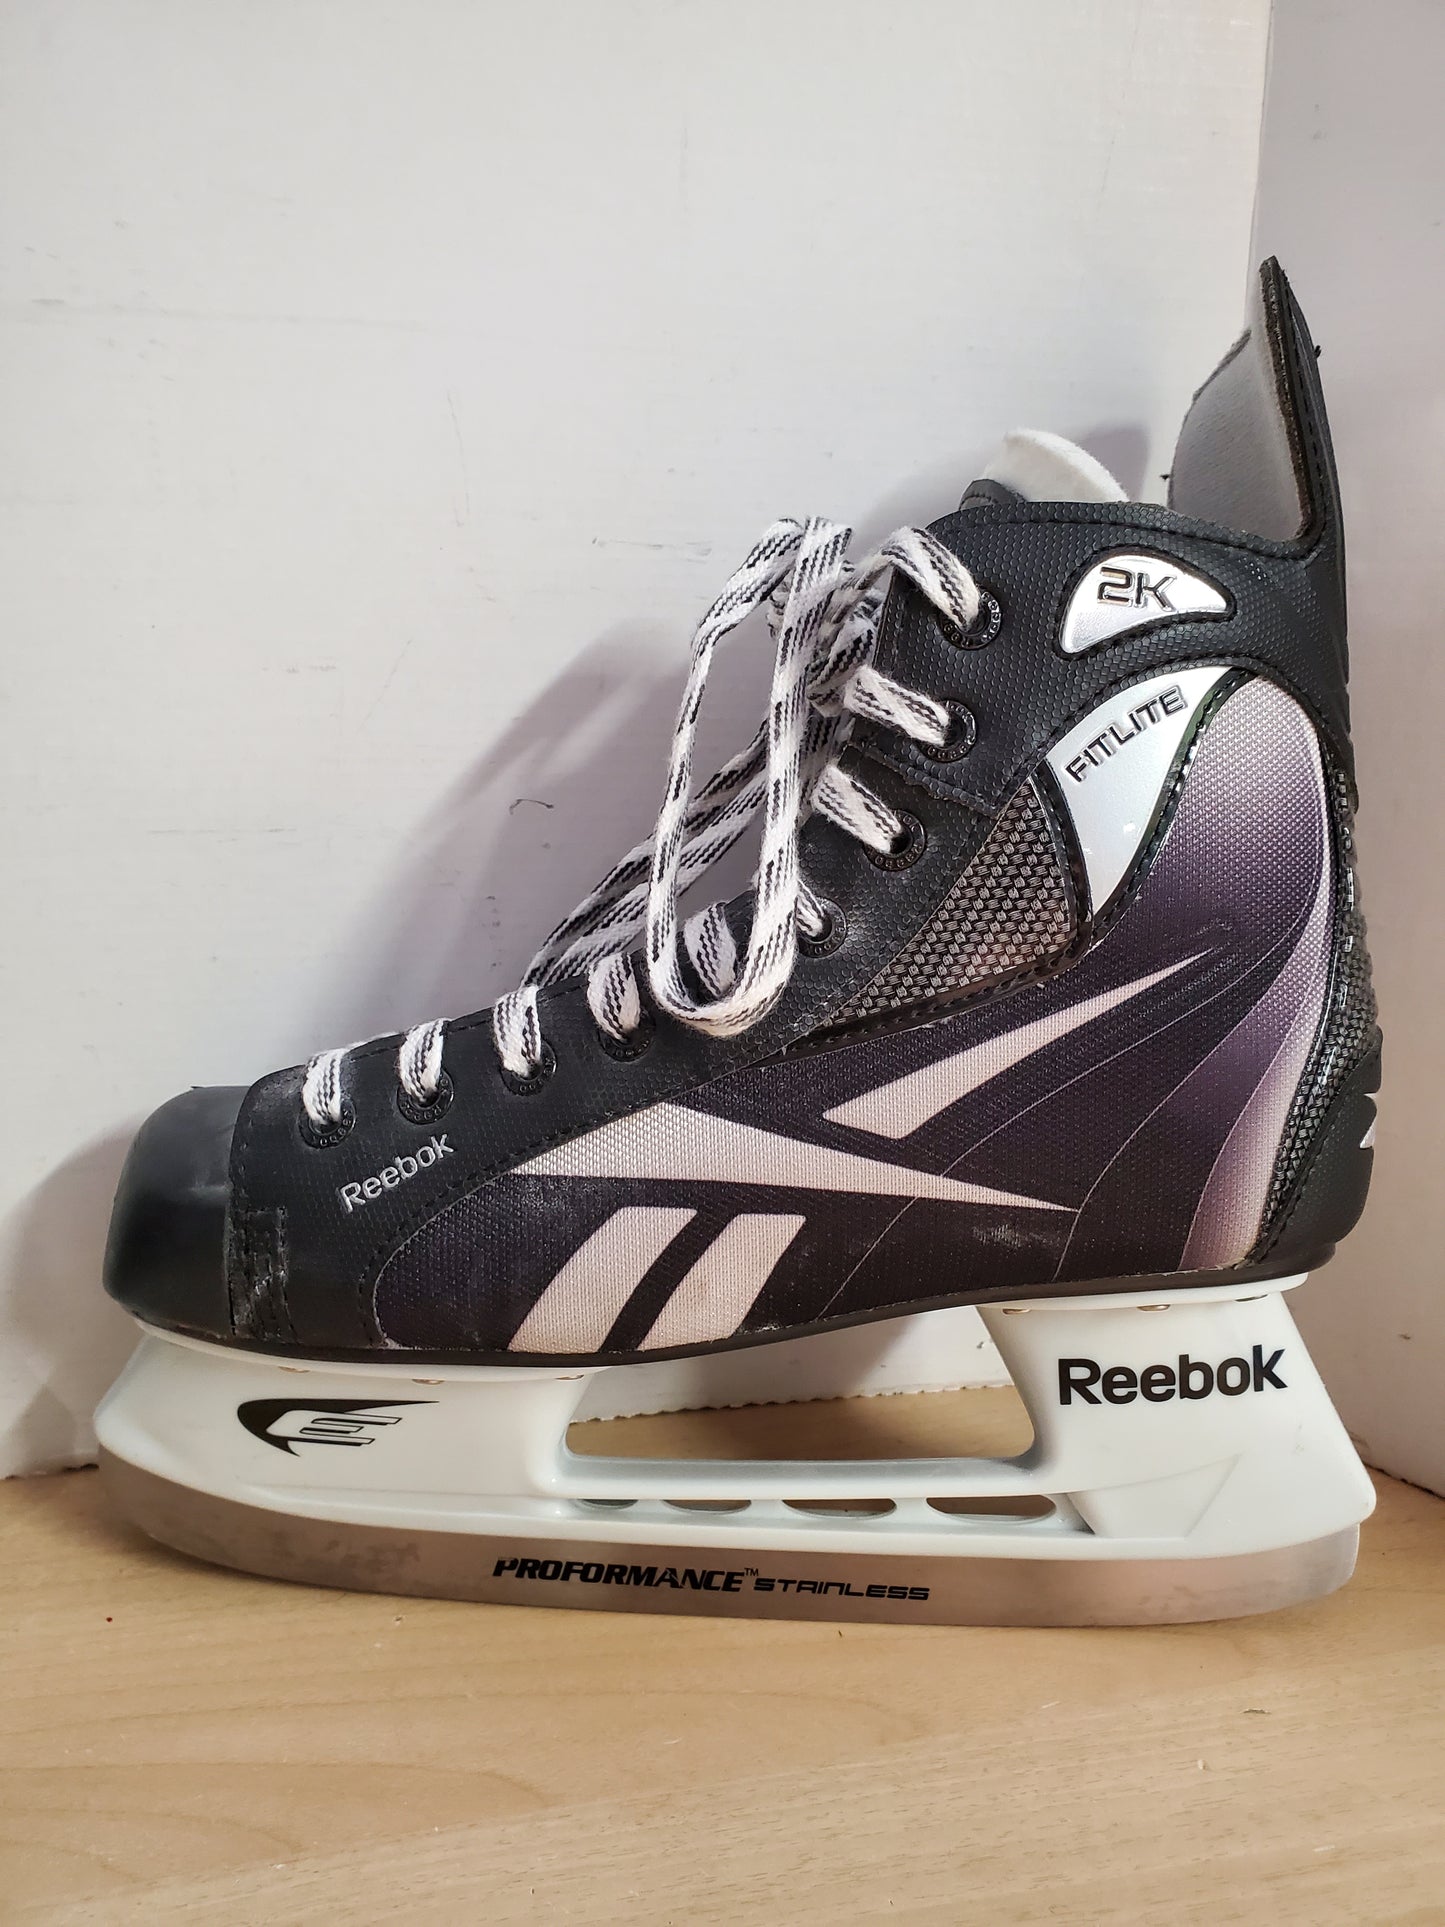 Hockey Skates Men's Size 8.5 Shoe Size Reebok Fitlite 2K Skates are as new Lace hooks have wear.